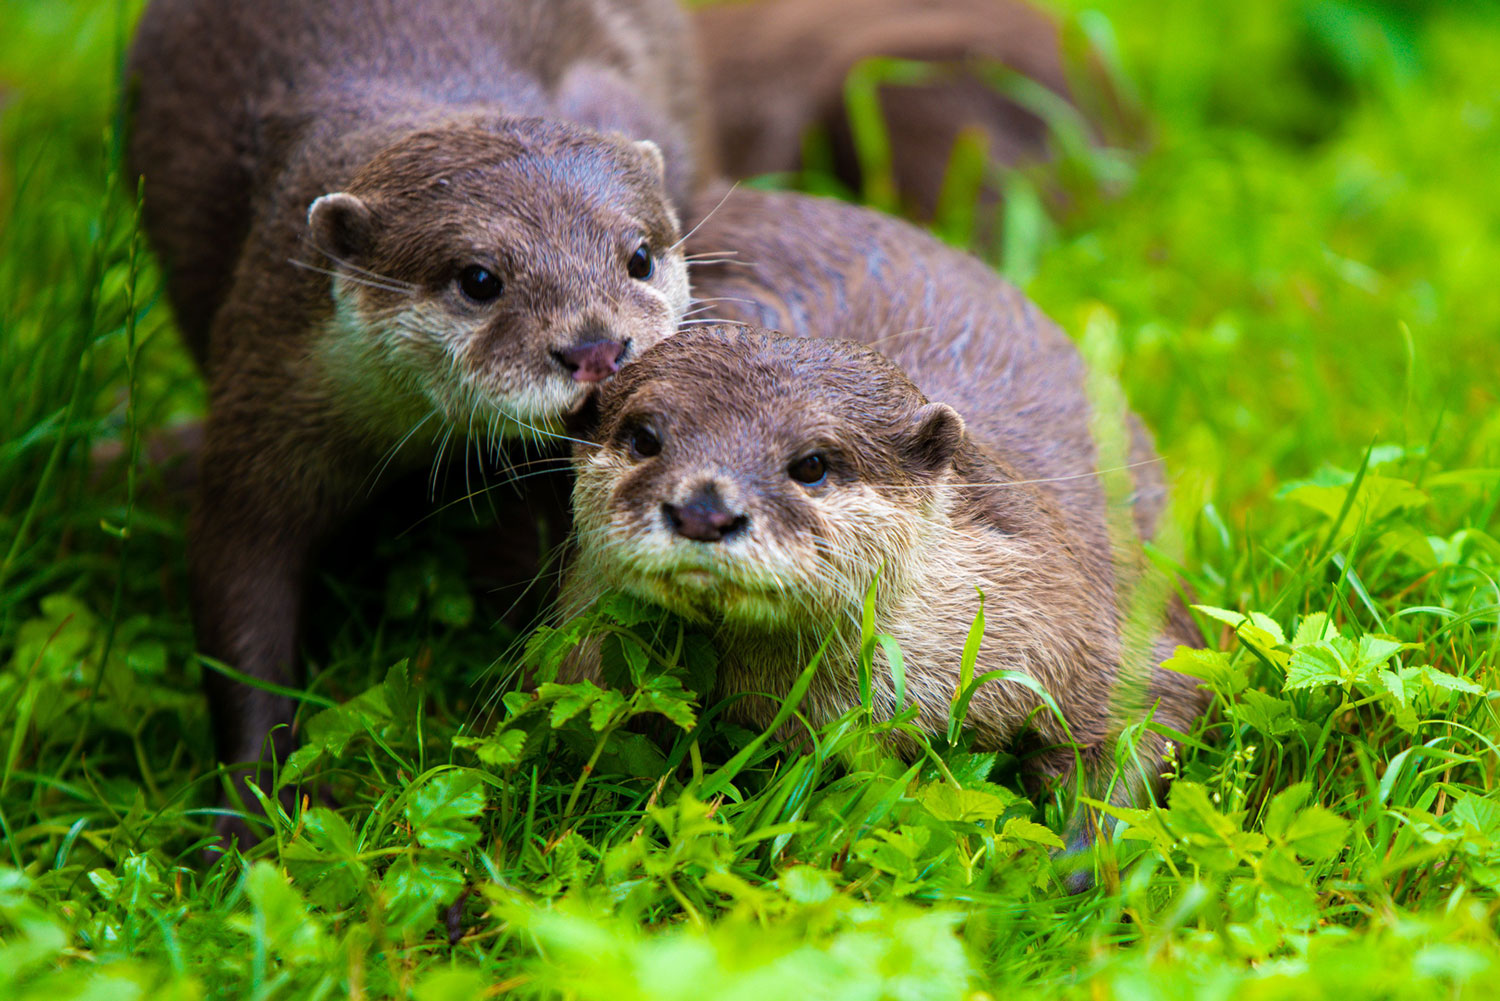 Pair of otters on the grass, Halsdon Nature Reserve, Devon, UK